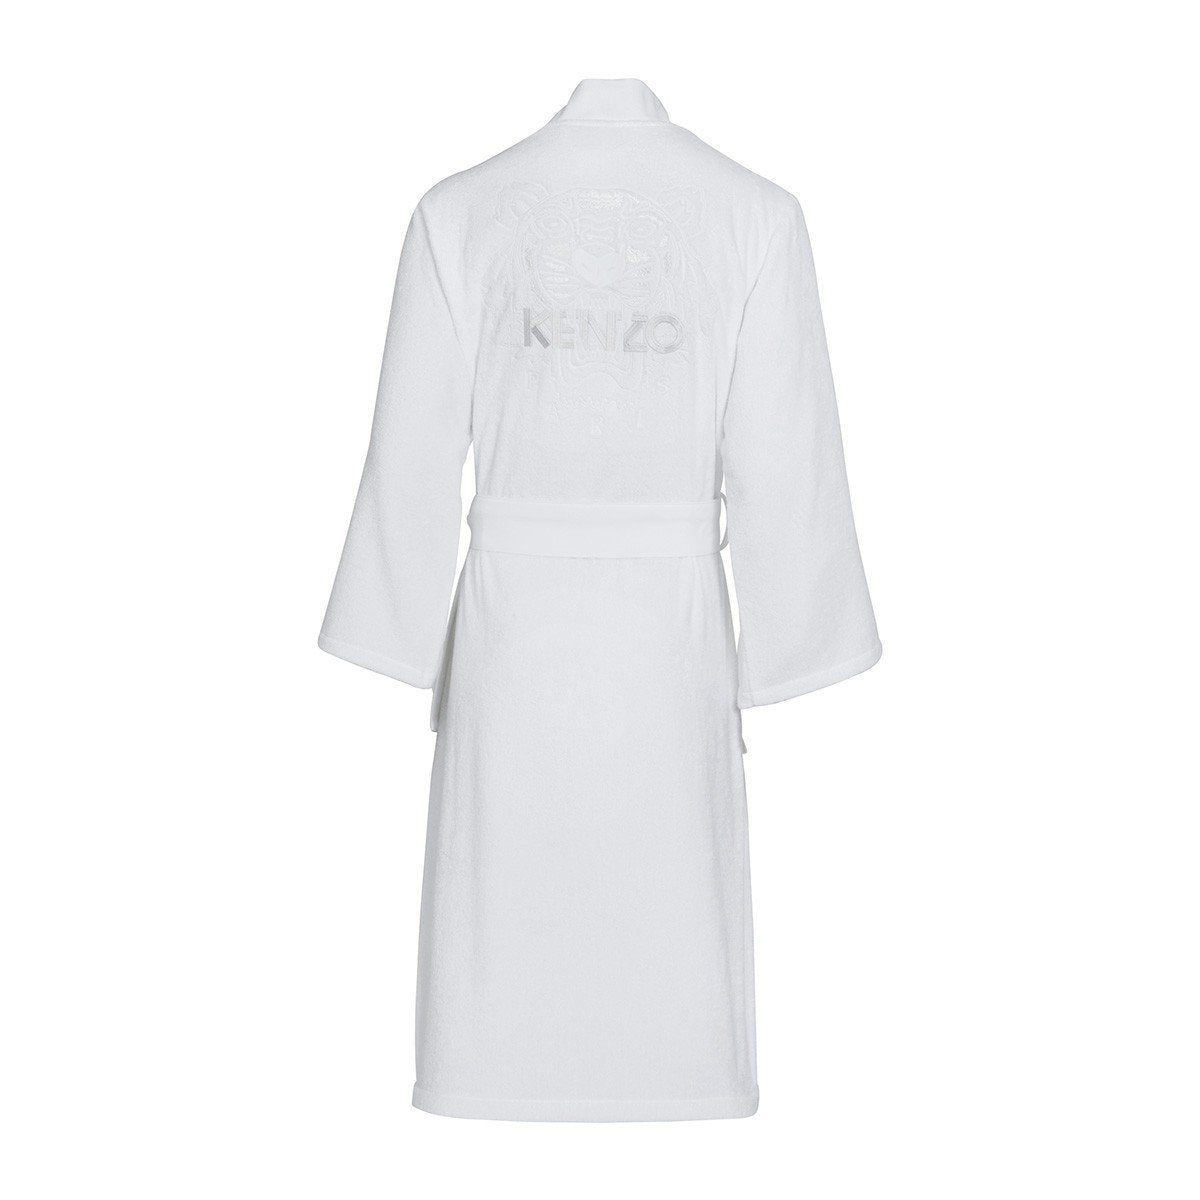 Iconic White Kimono Bath Robe by Kenzo | Fig Linens - Back